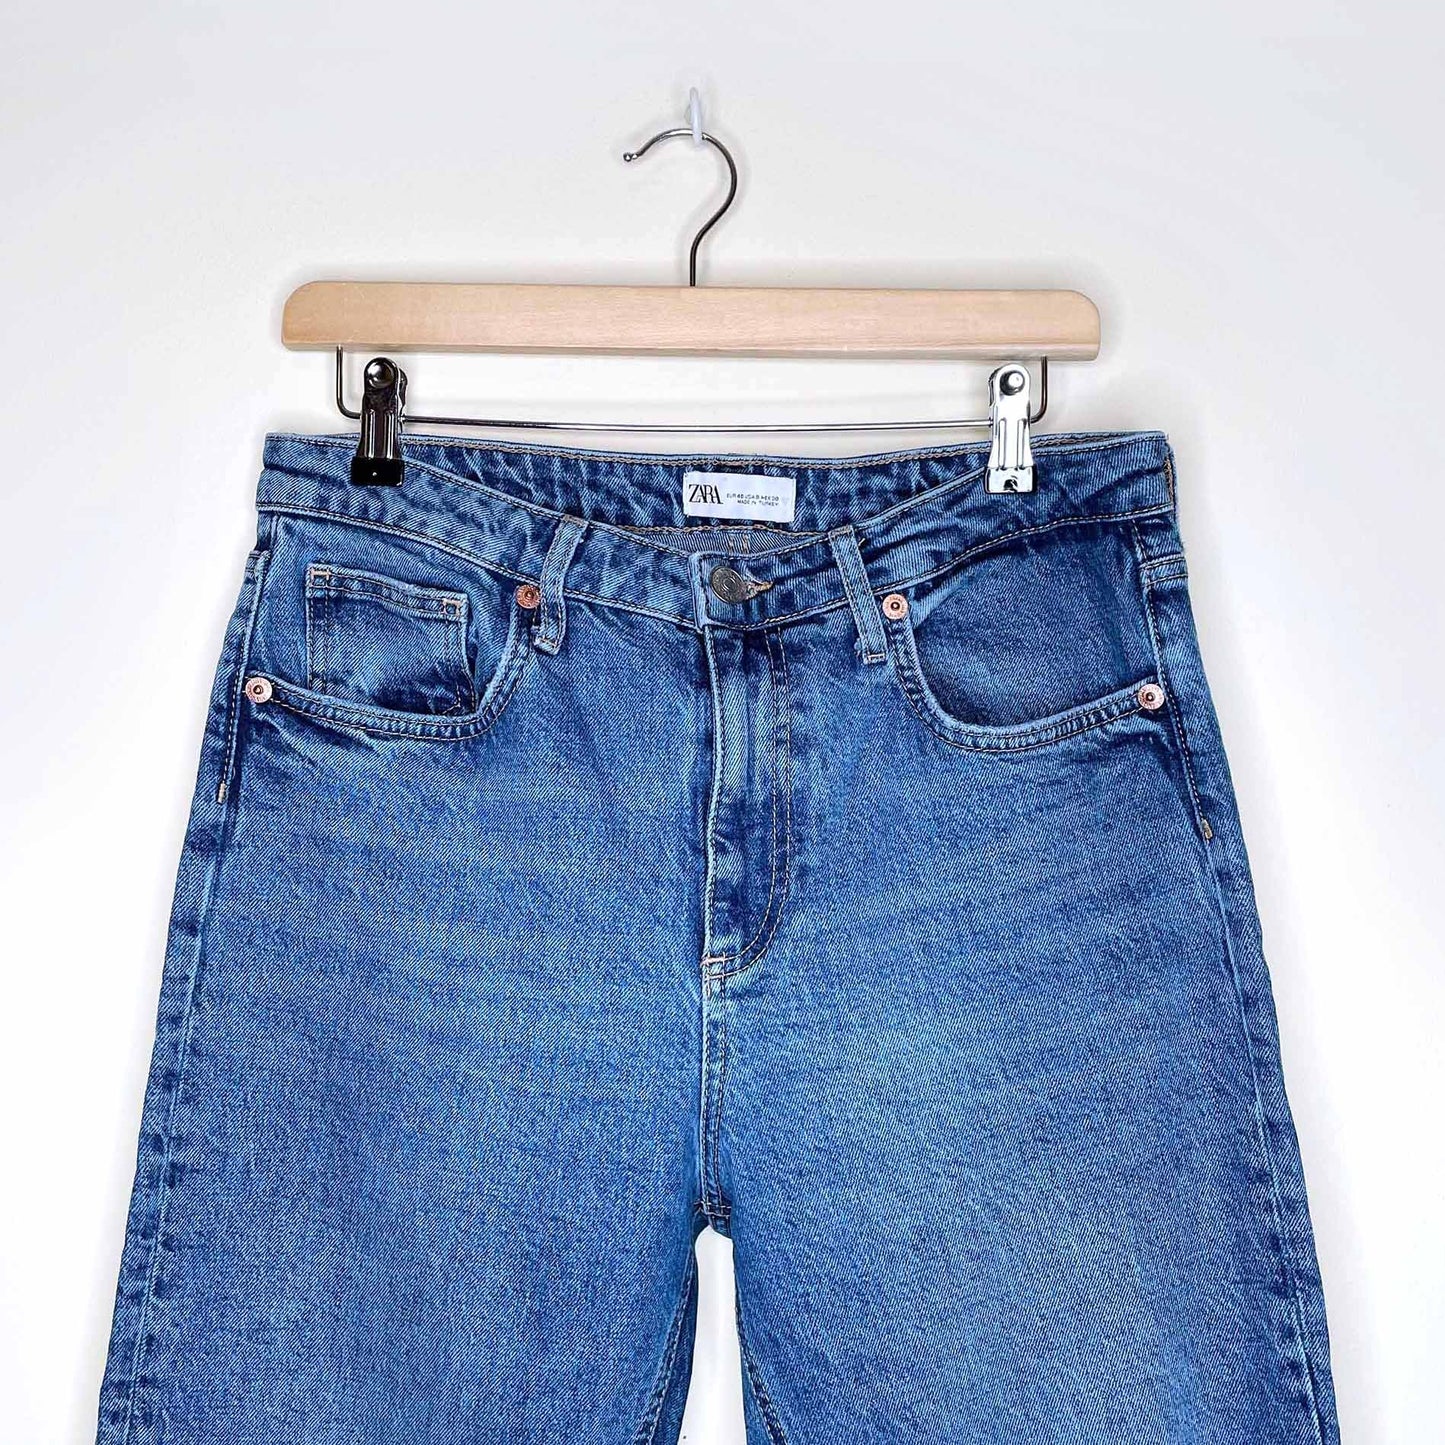 zara high rise medium wash tapered mom jeans - size 8